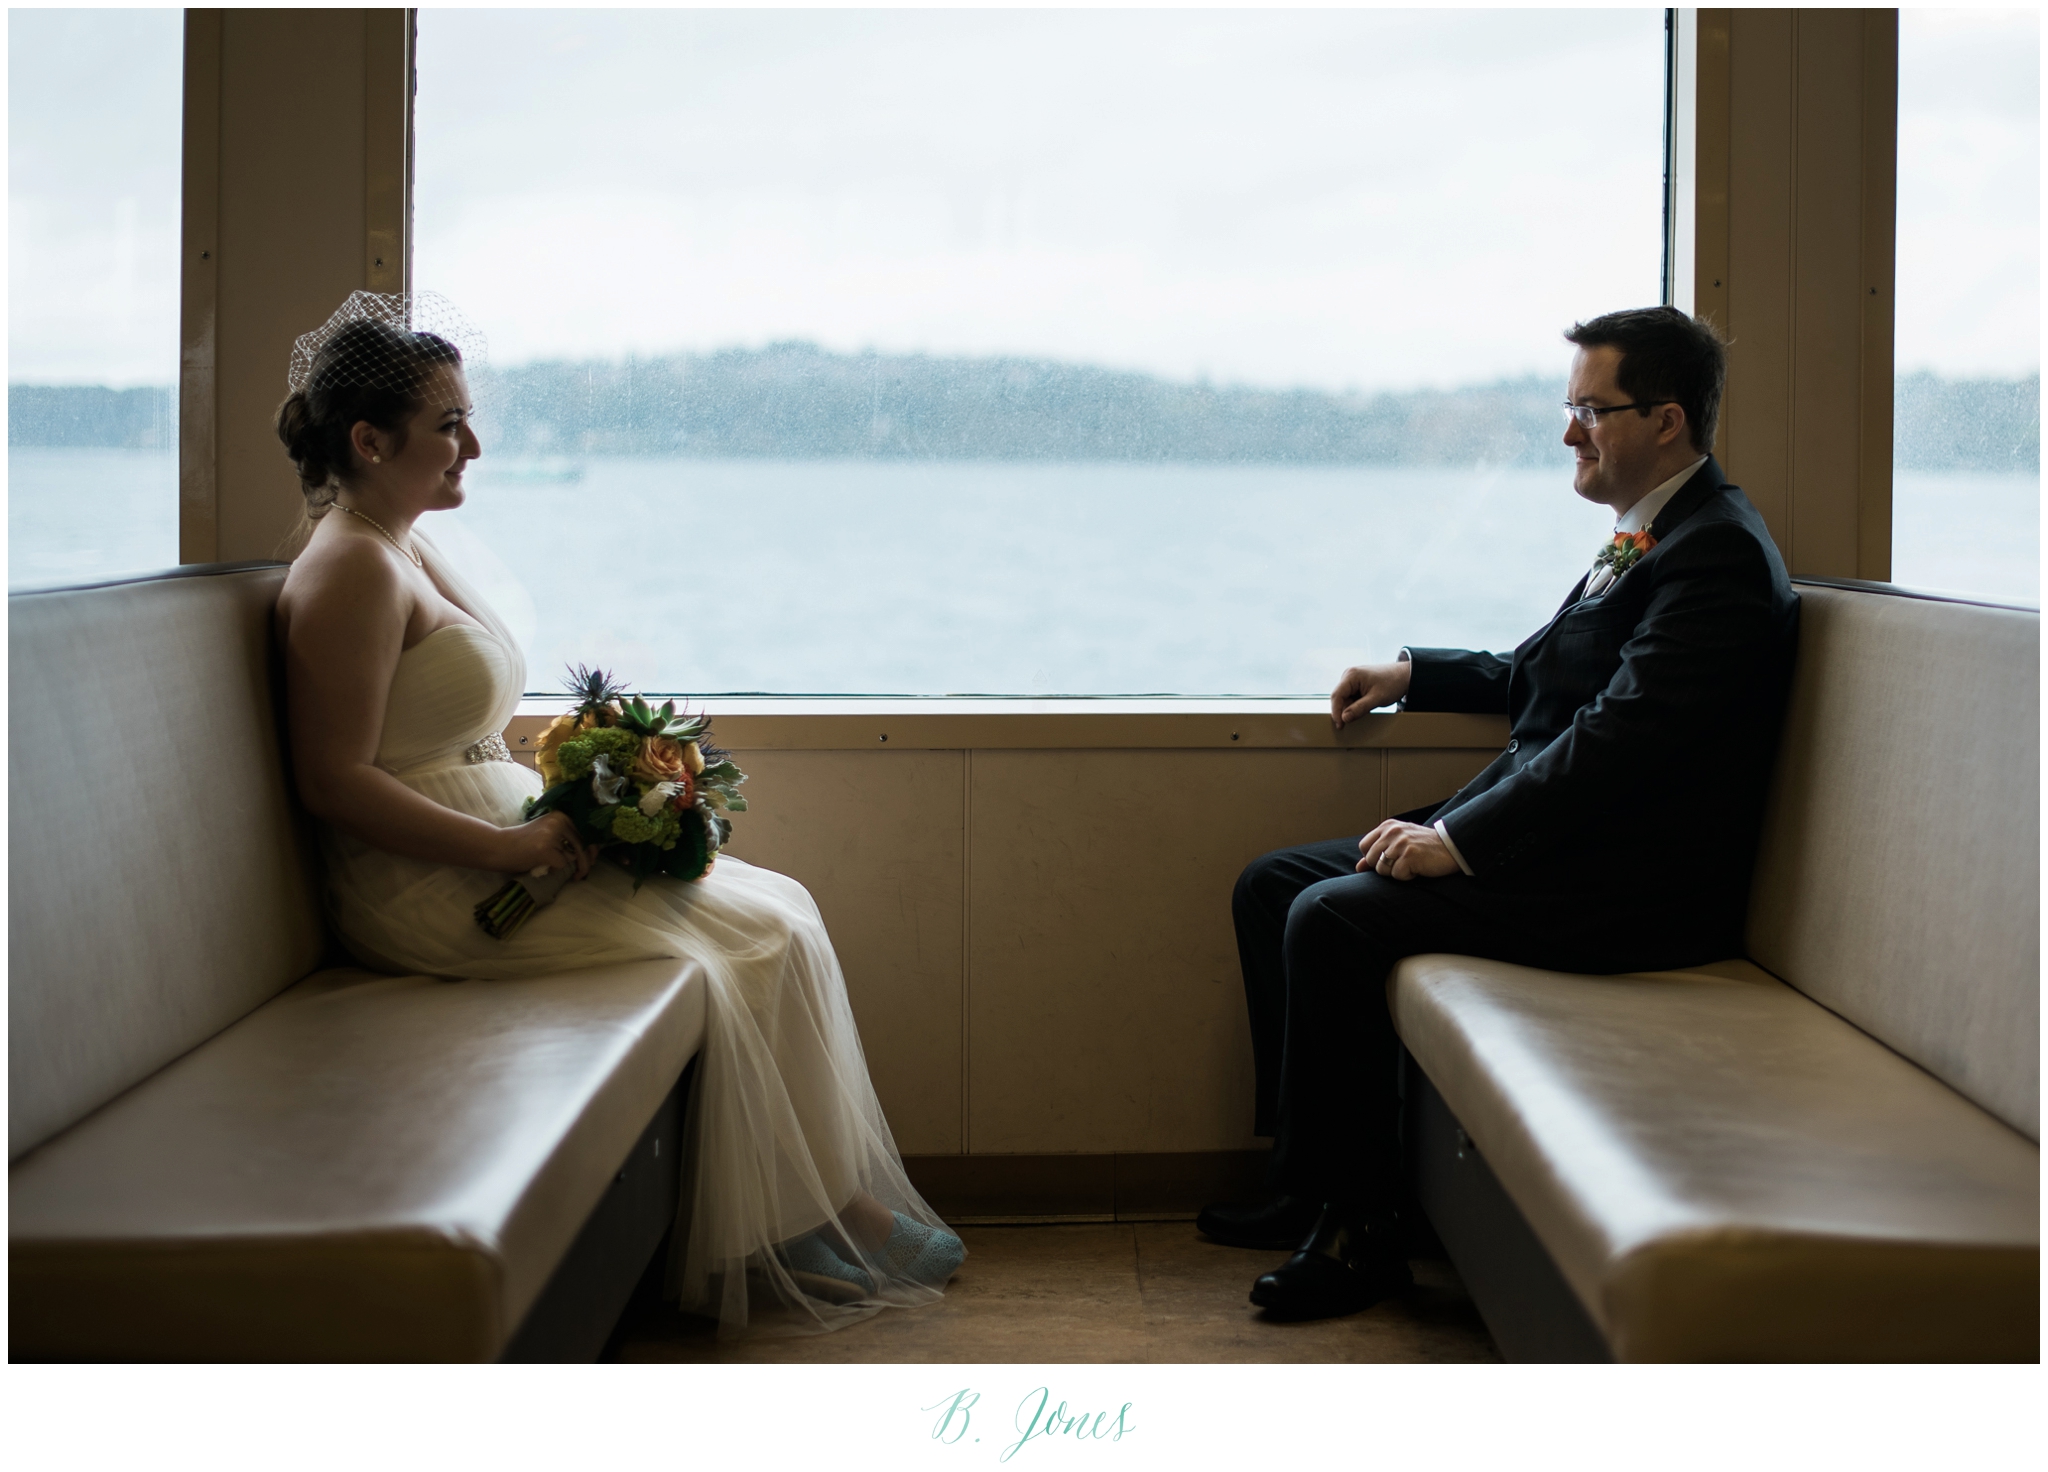 Seattle Ferry Wedding. Piccolino Reception. Seattle Wedding Photographer B. Jones Photography. World Spice Market. Pikes Place Market. Vintage Rolls Royce